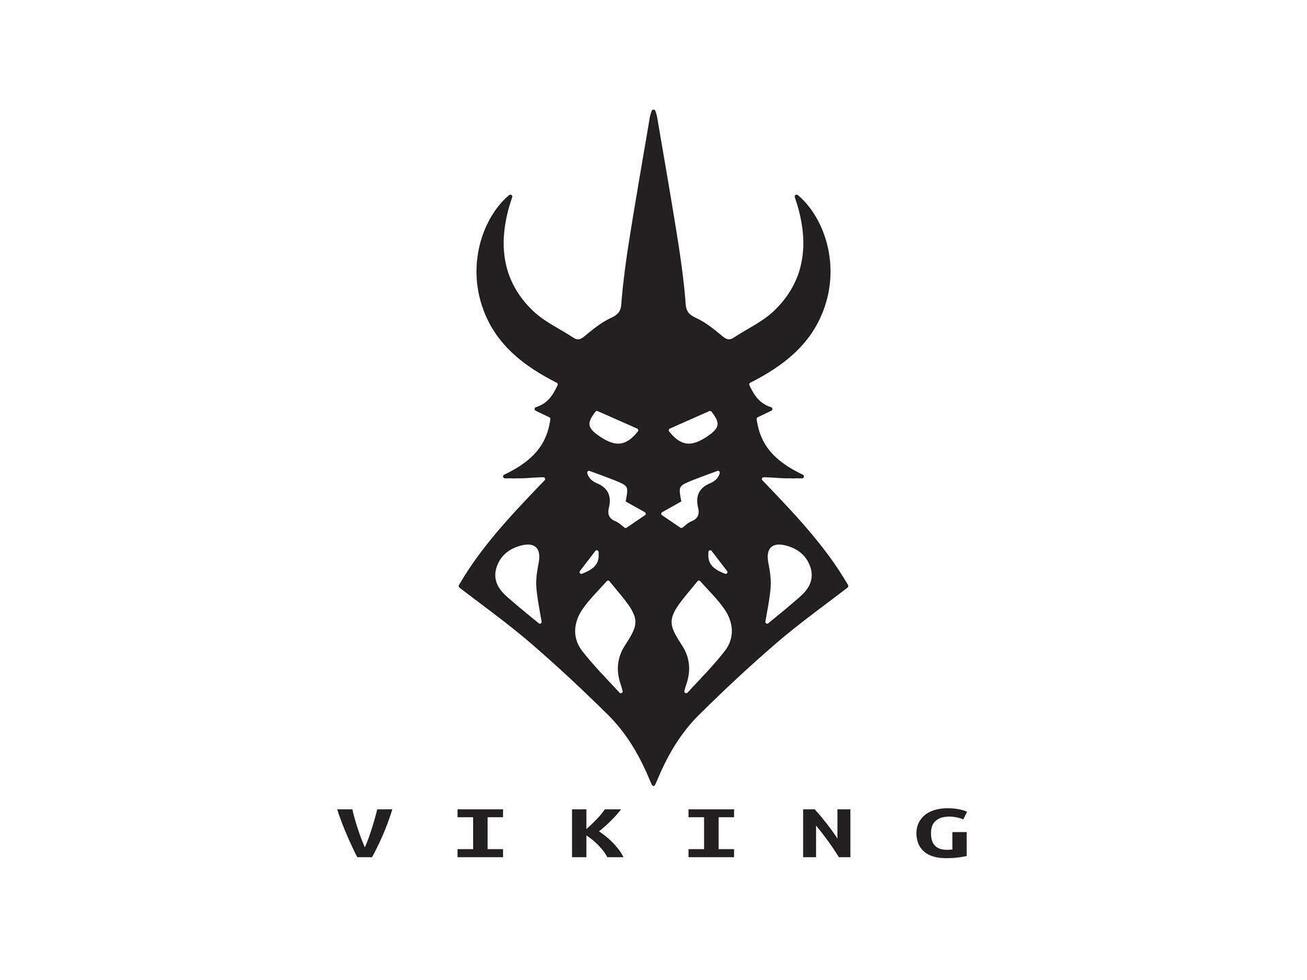 Viking head face logo template vector